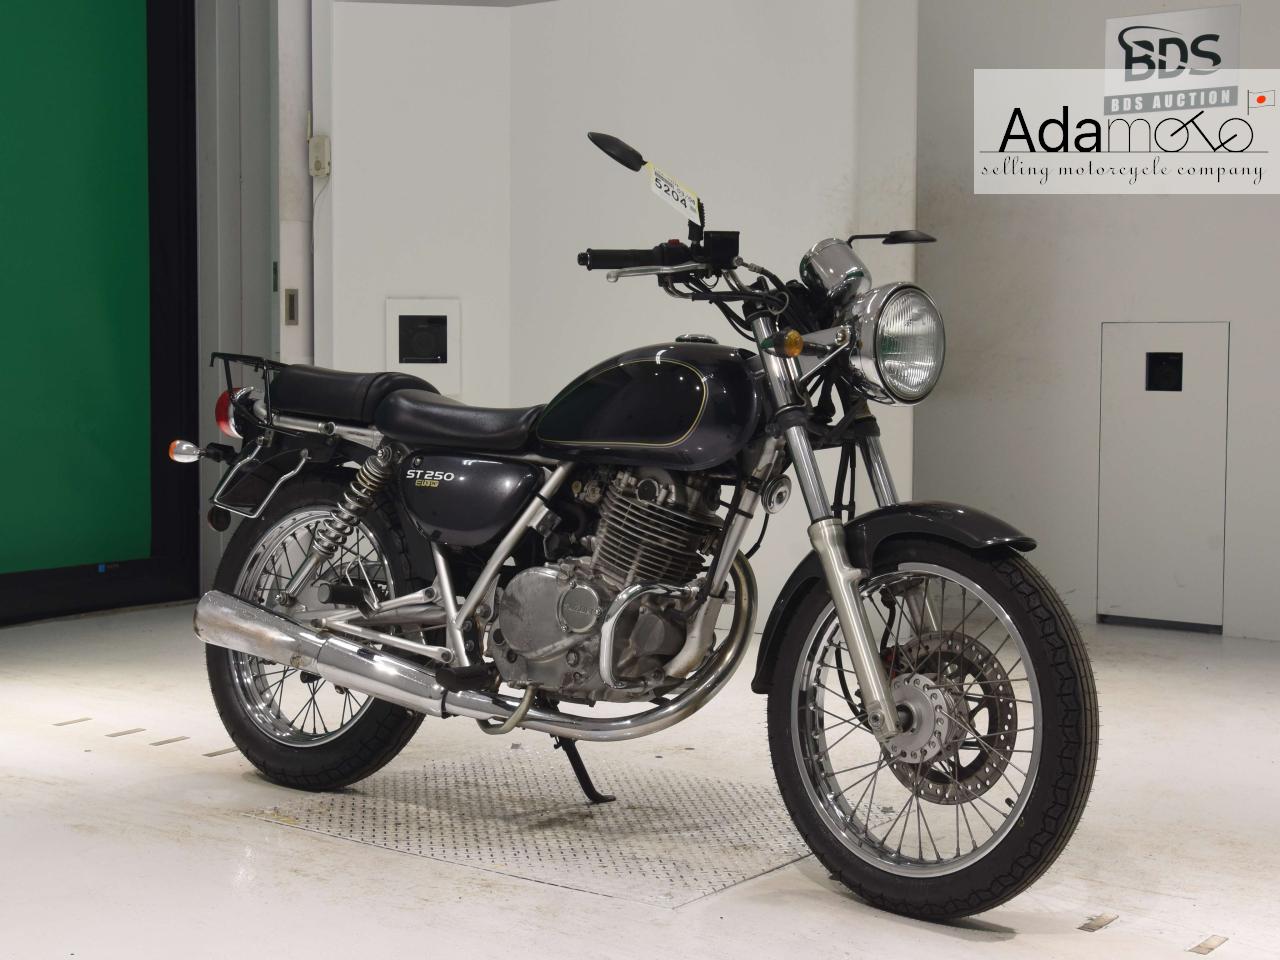 Suzuki ST250E - Adamoto - Motorcycles from Japan